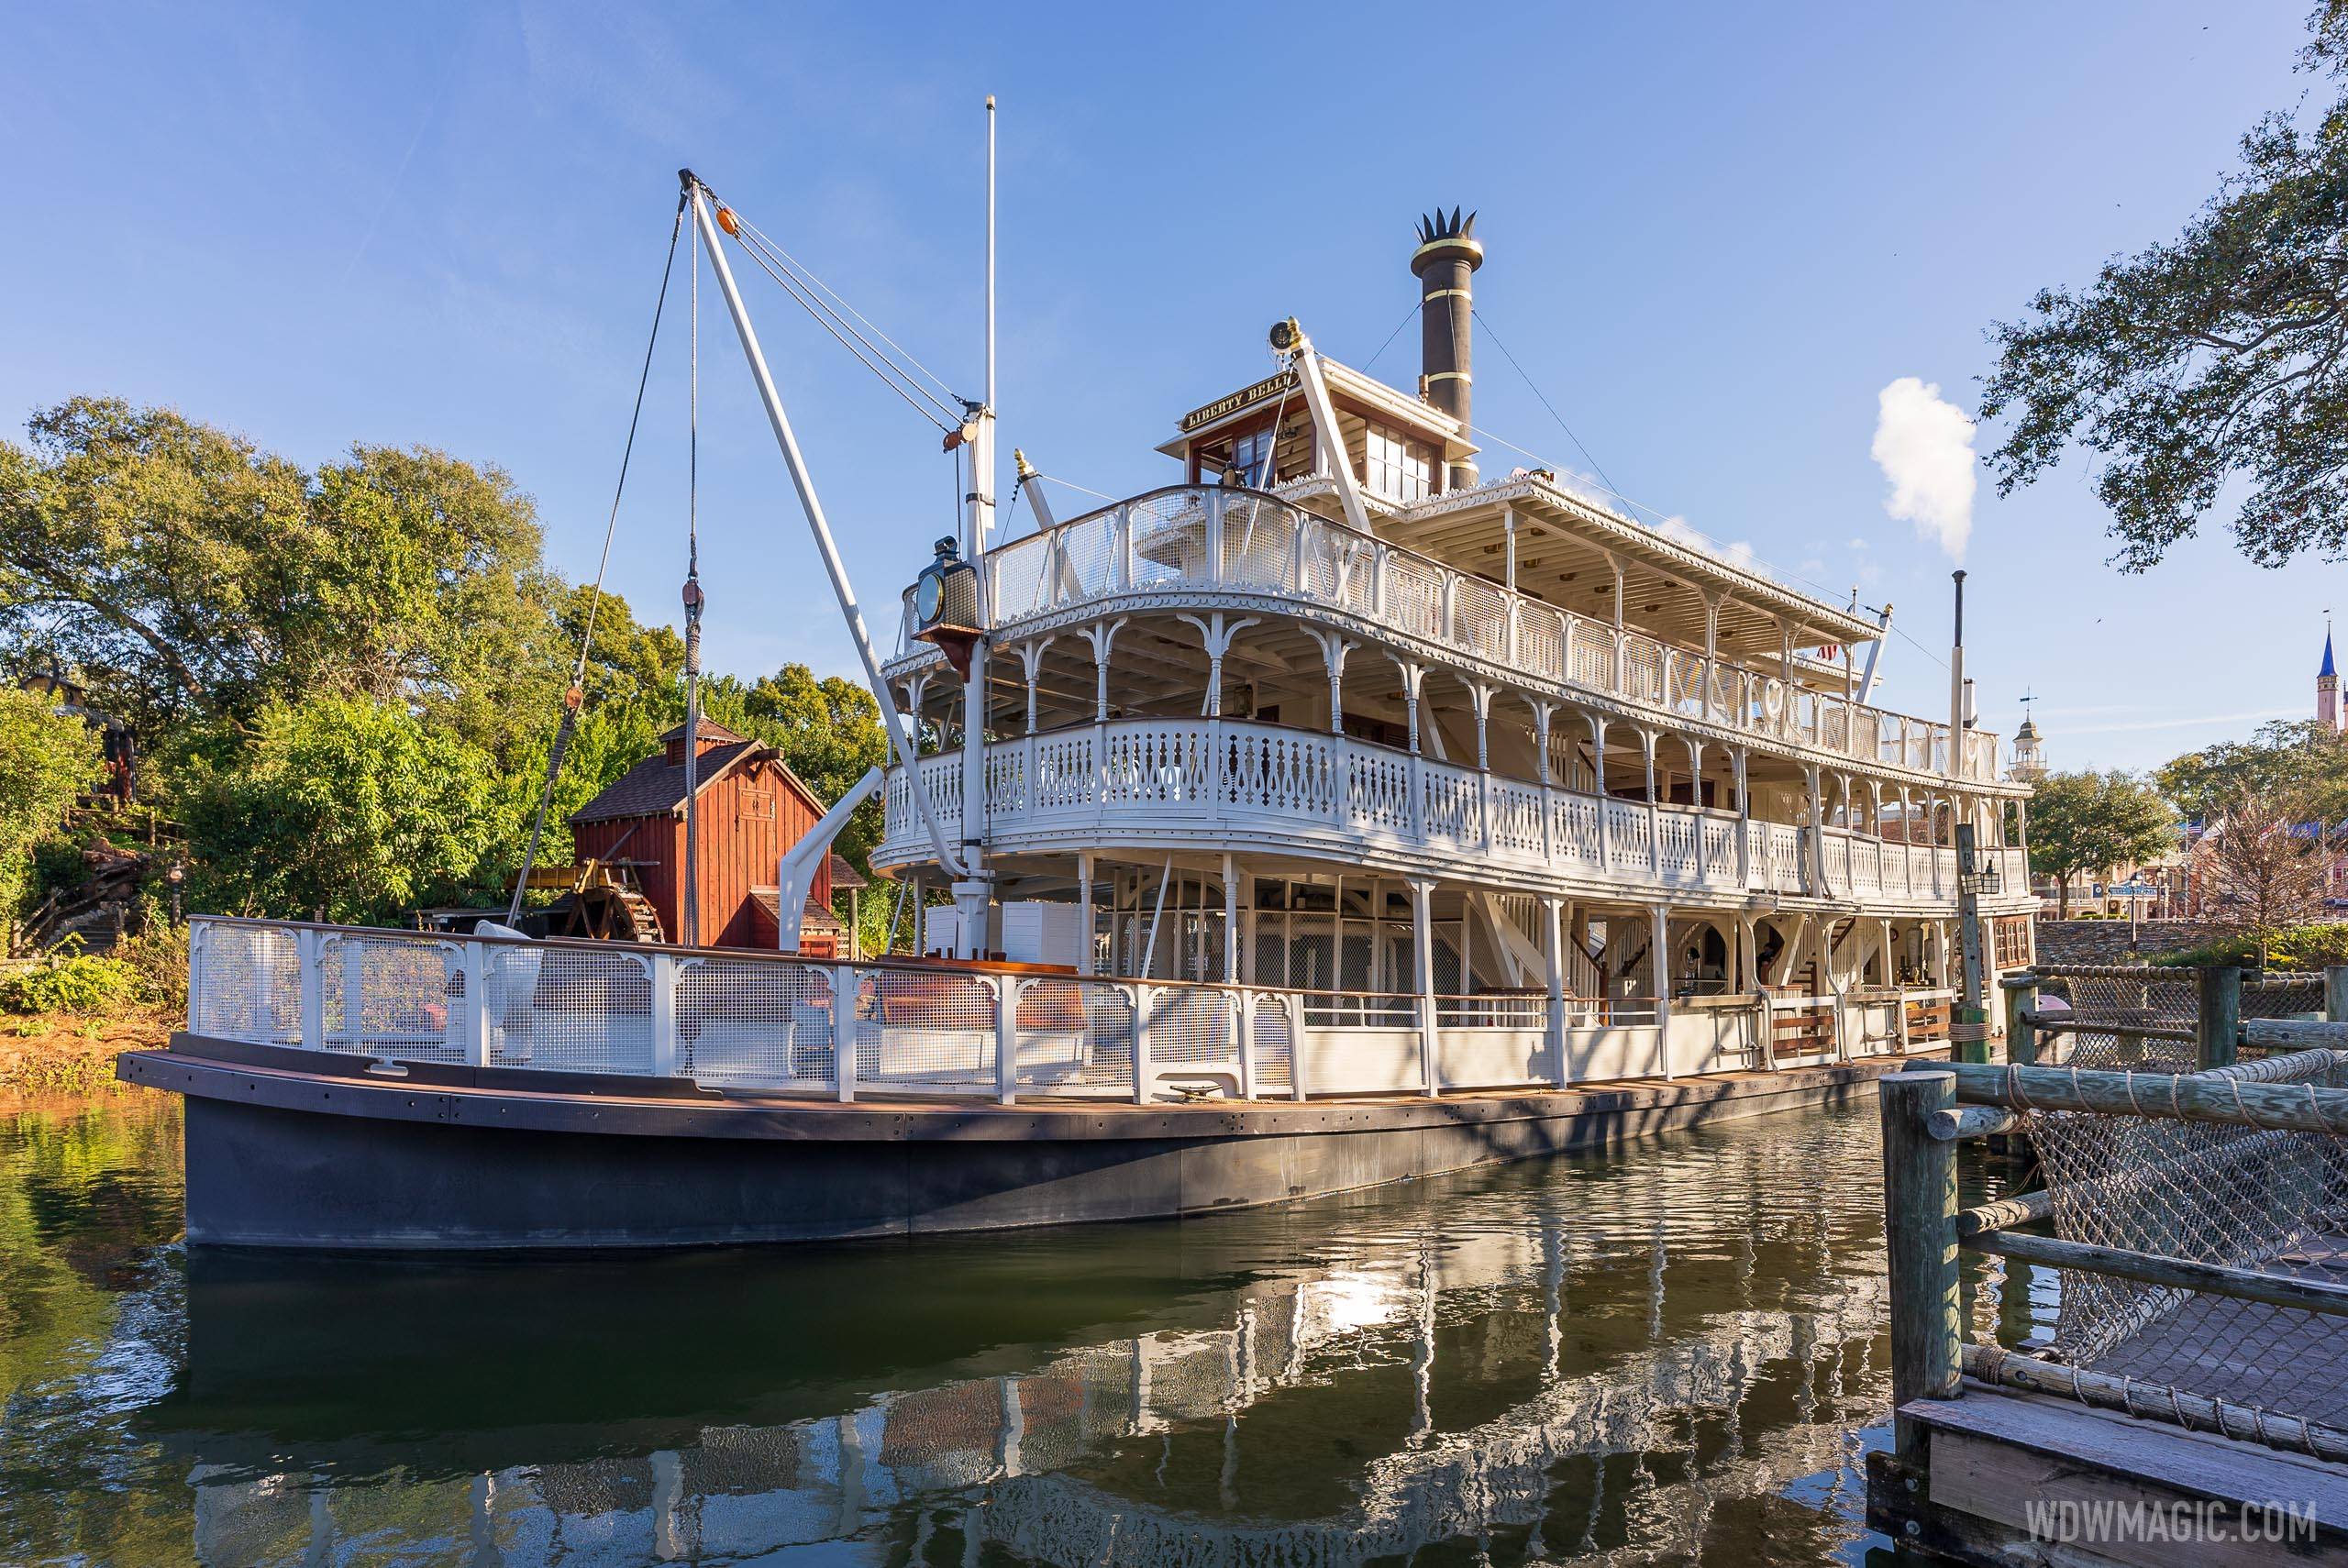  Liberty Square Riverboat closing for refurbishment at Magic Kingdom